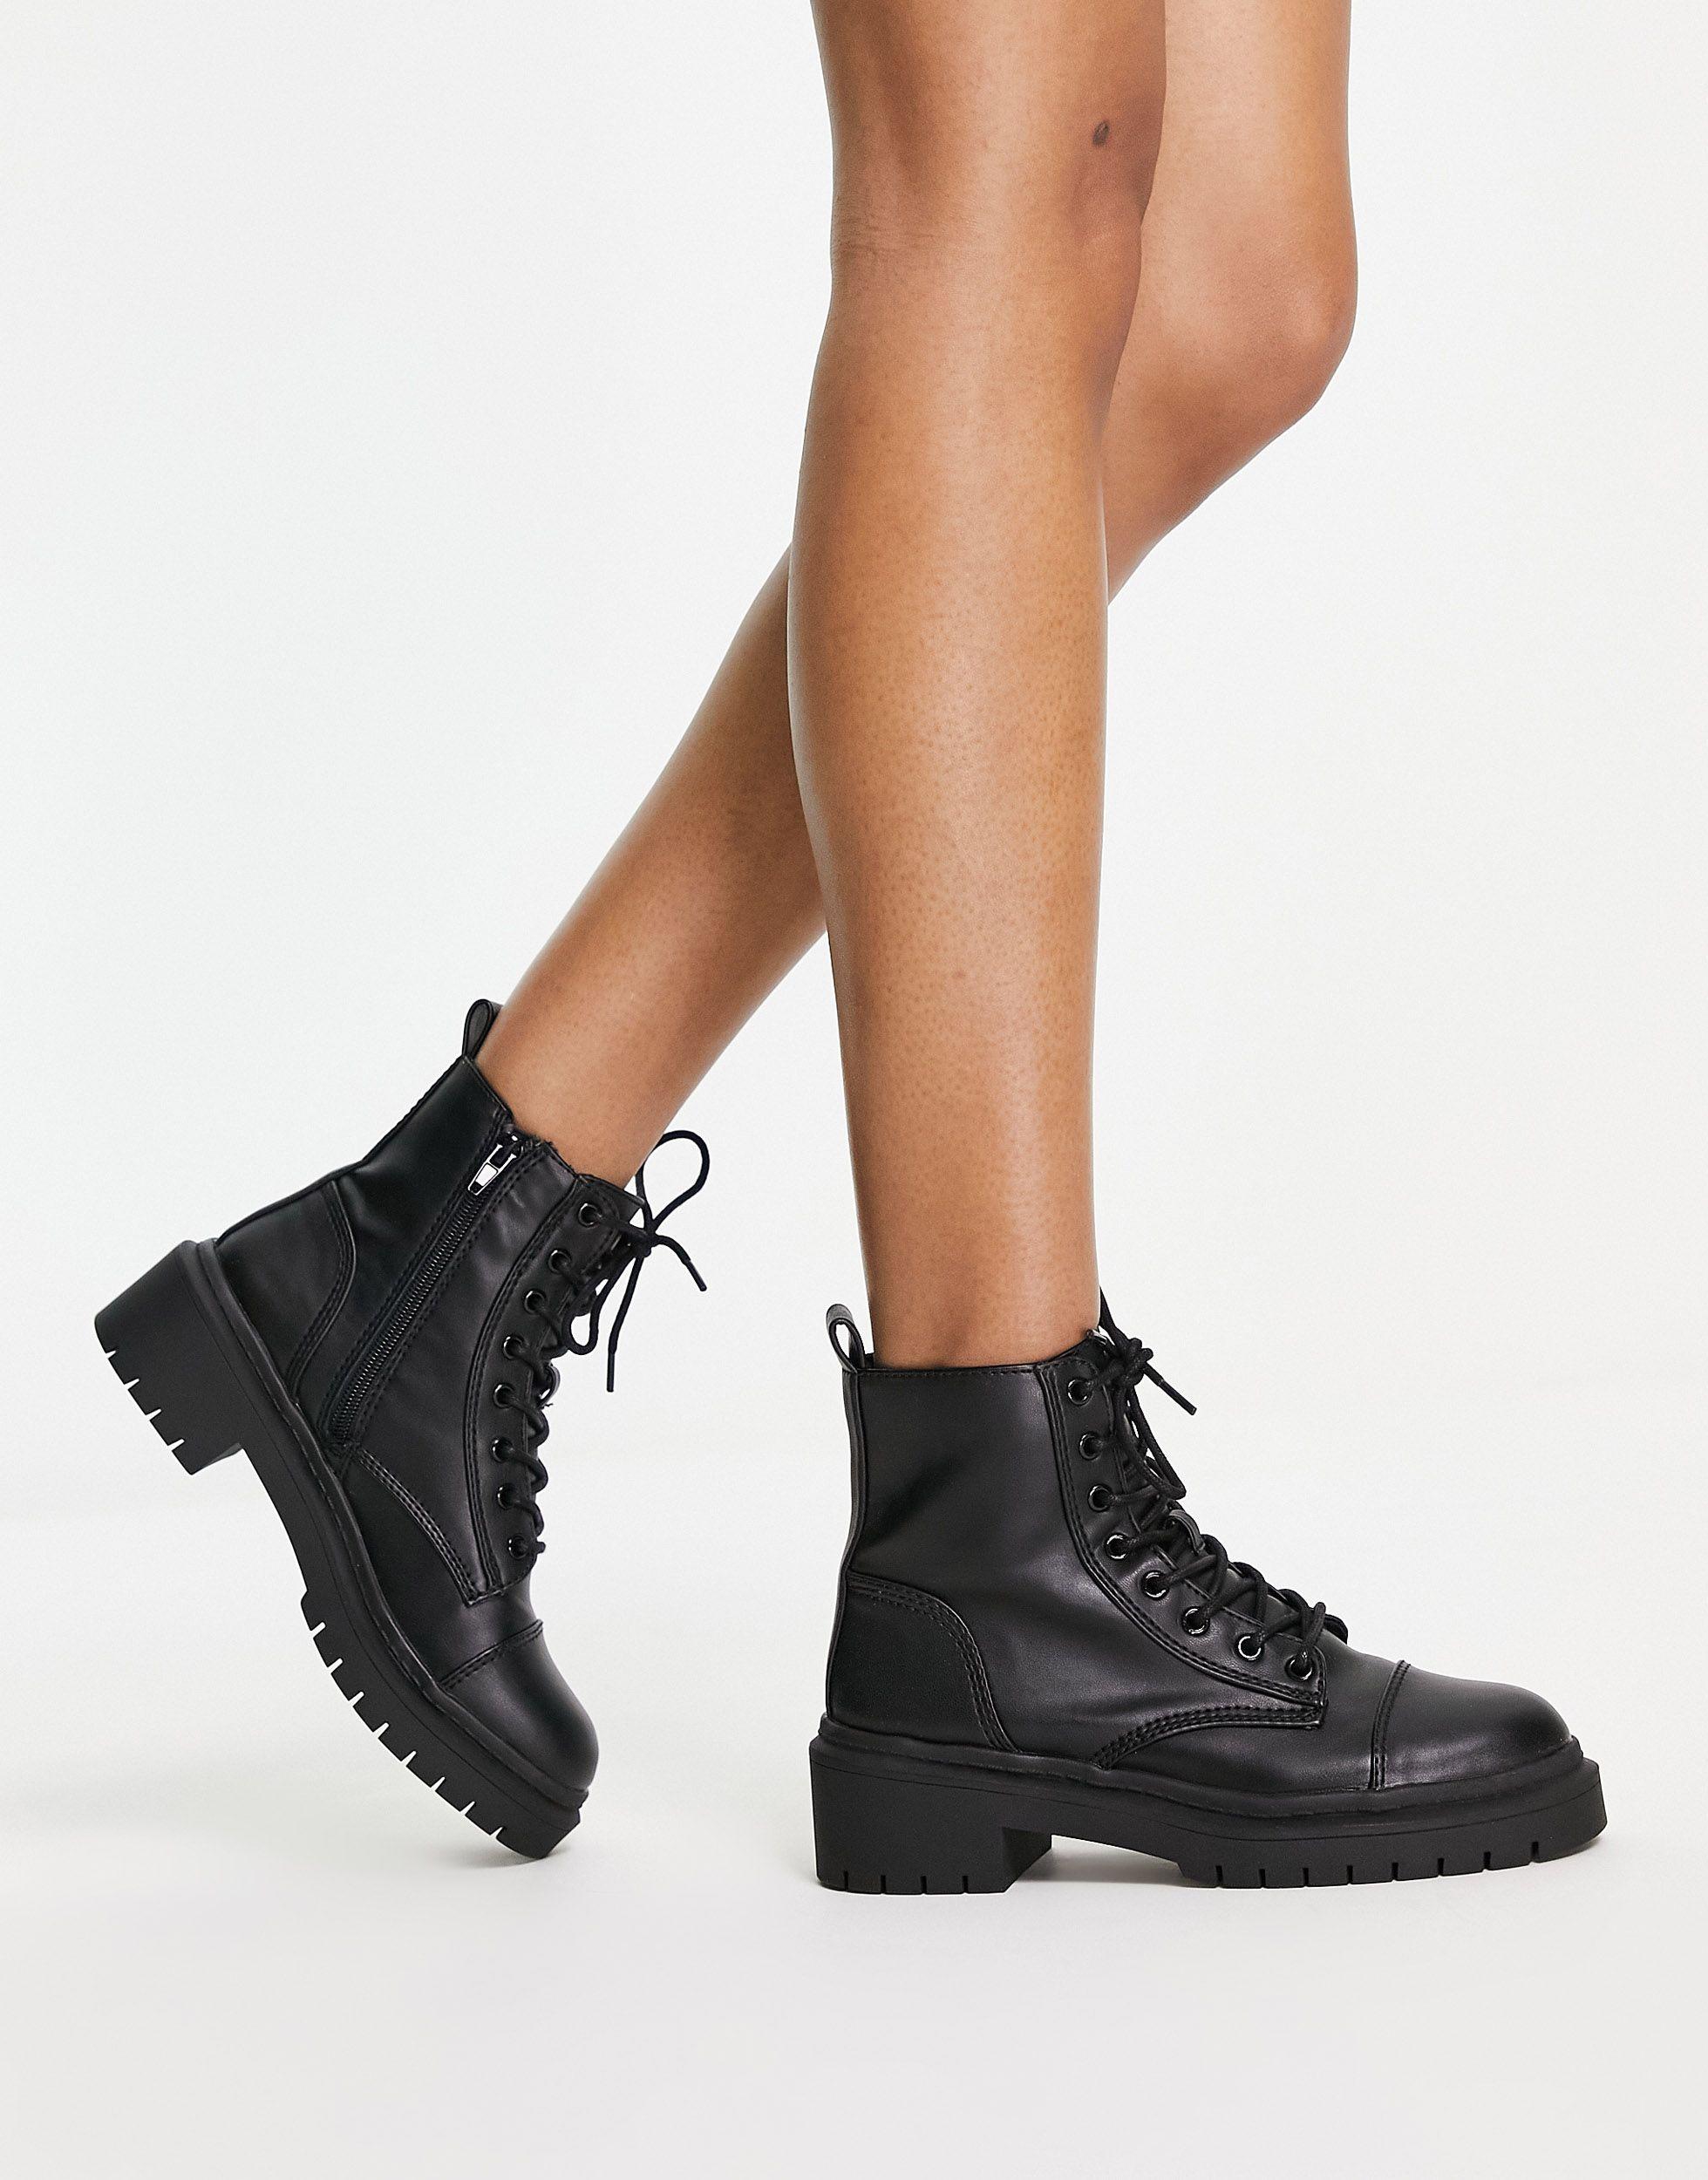 ALDO Goer Lace Up Boots in Black | Lyst